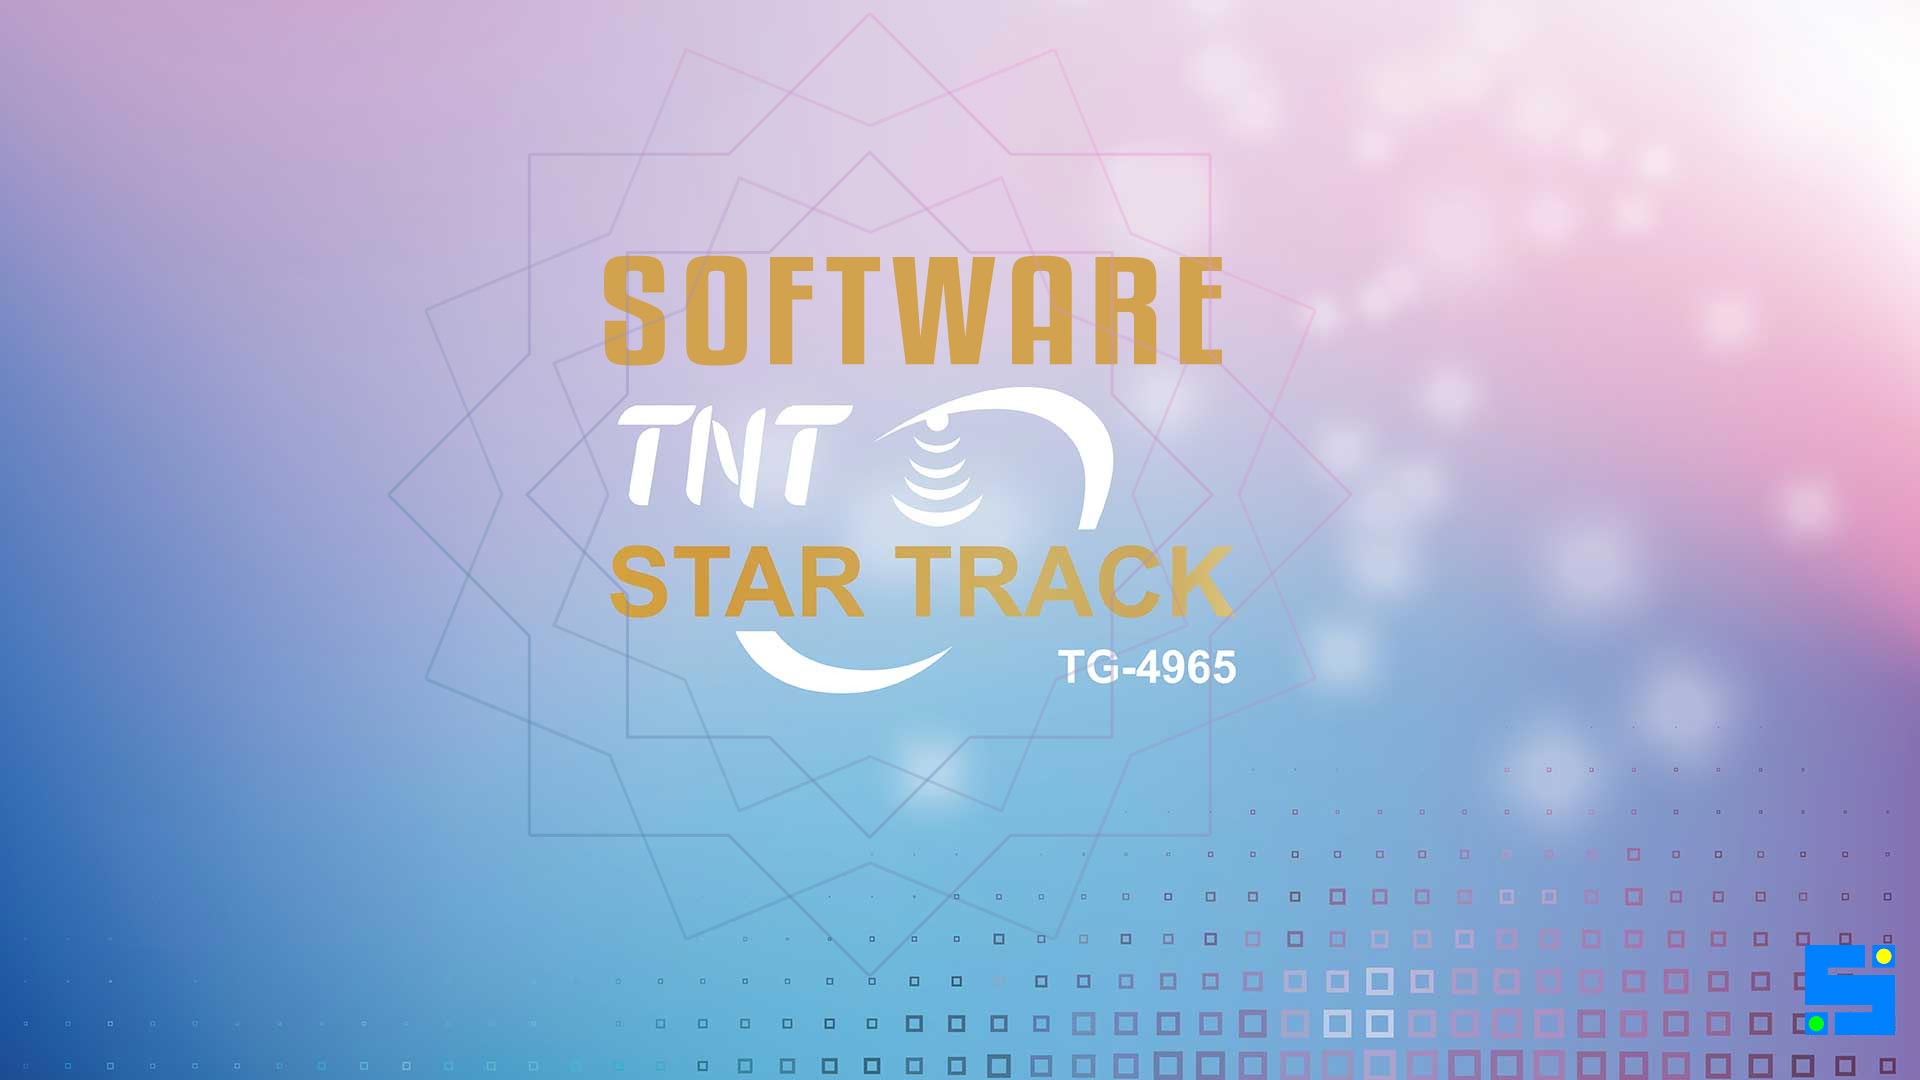 Download Software Star Track TNT TG 4965 Update Firmware Receiver